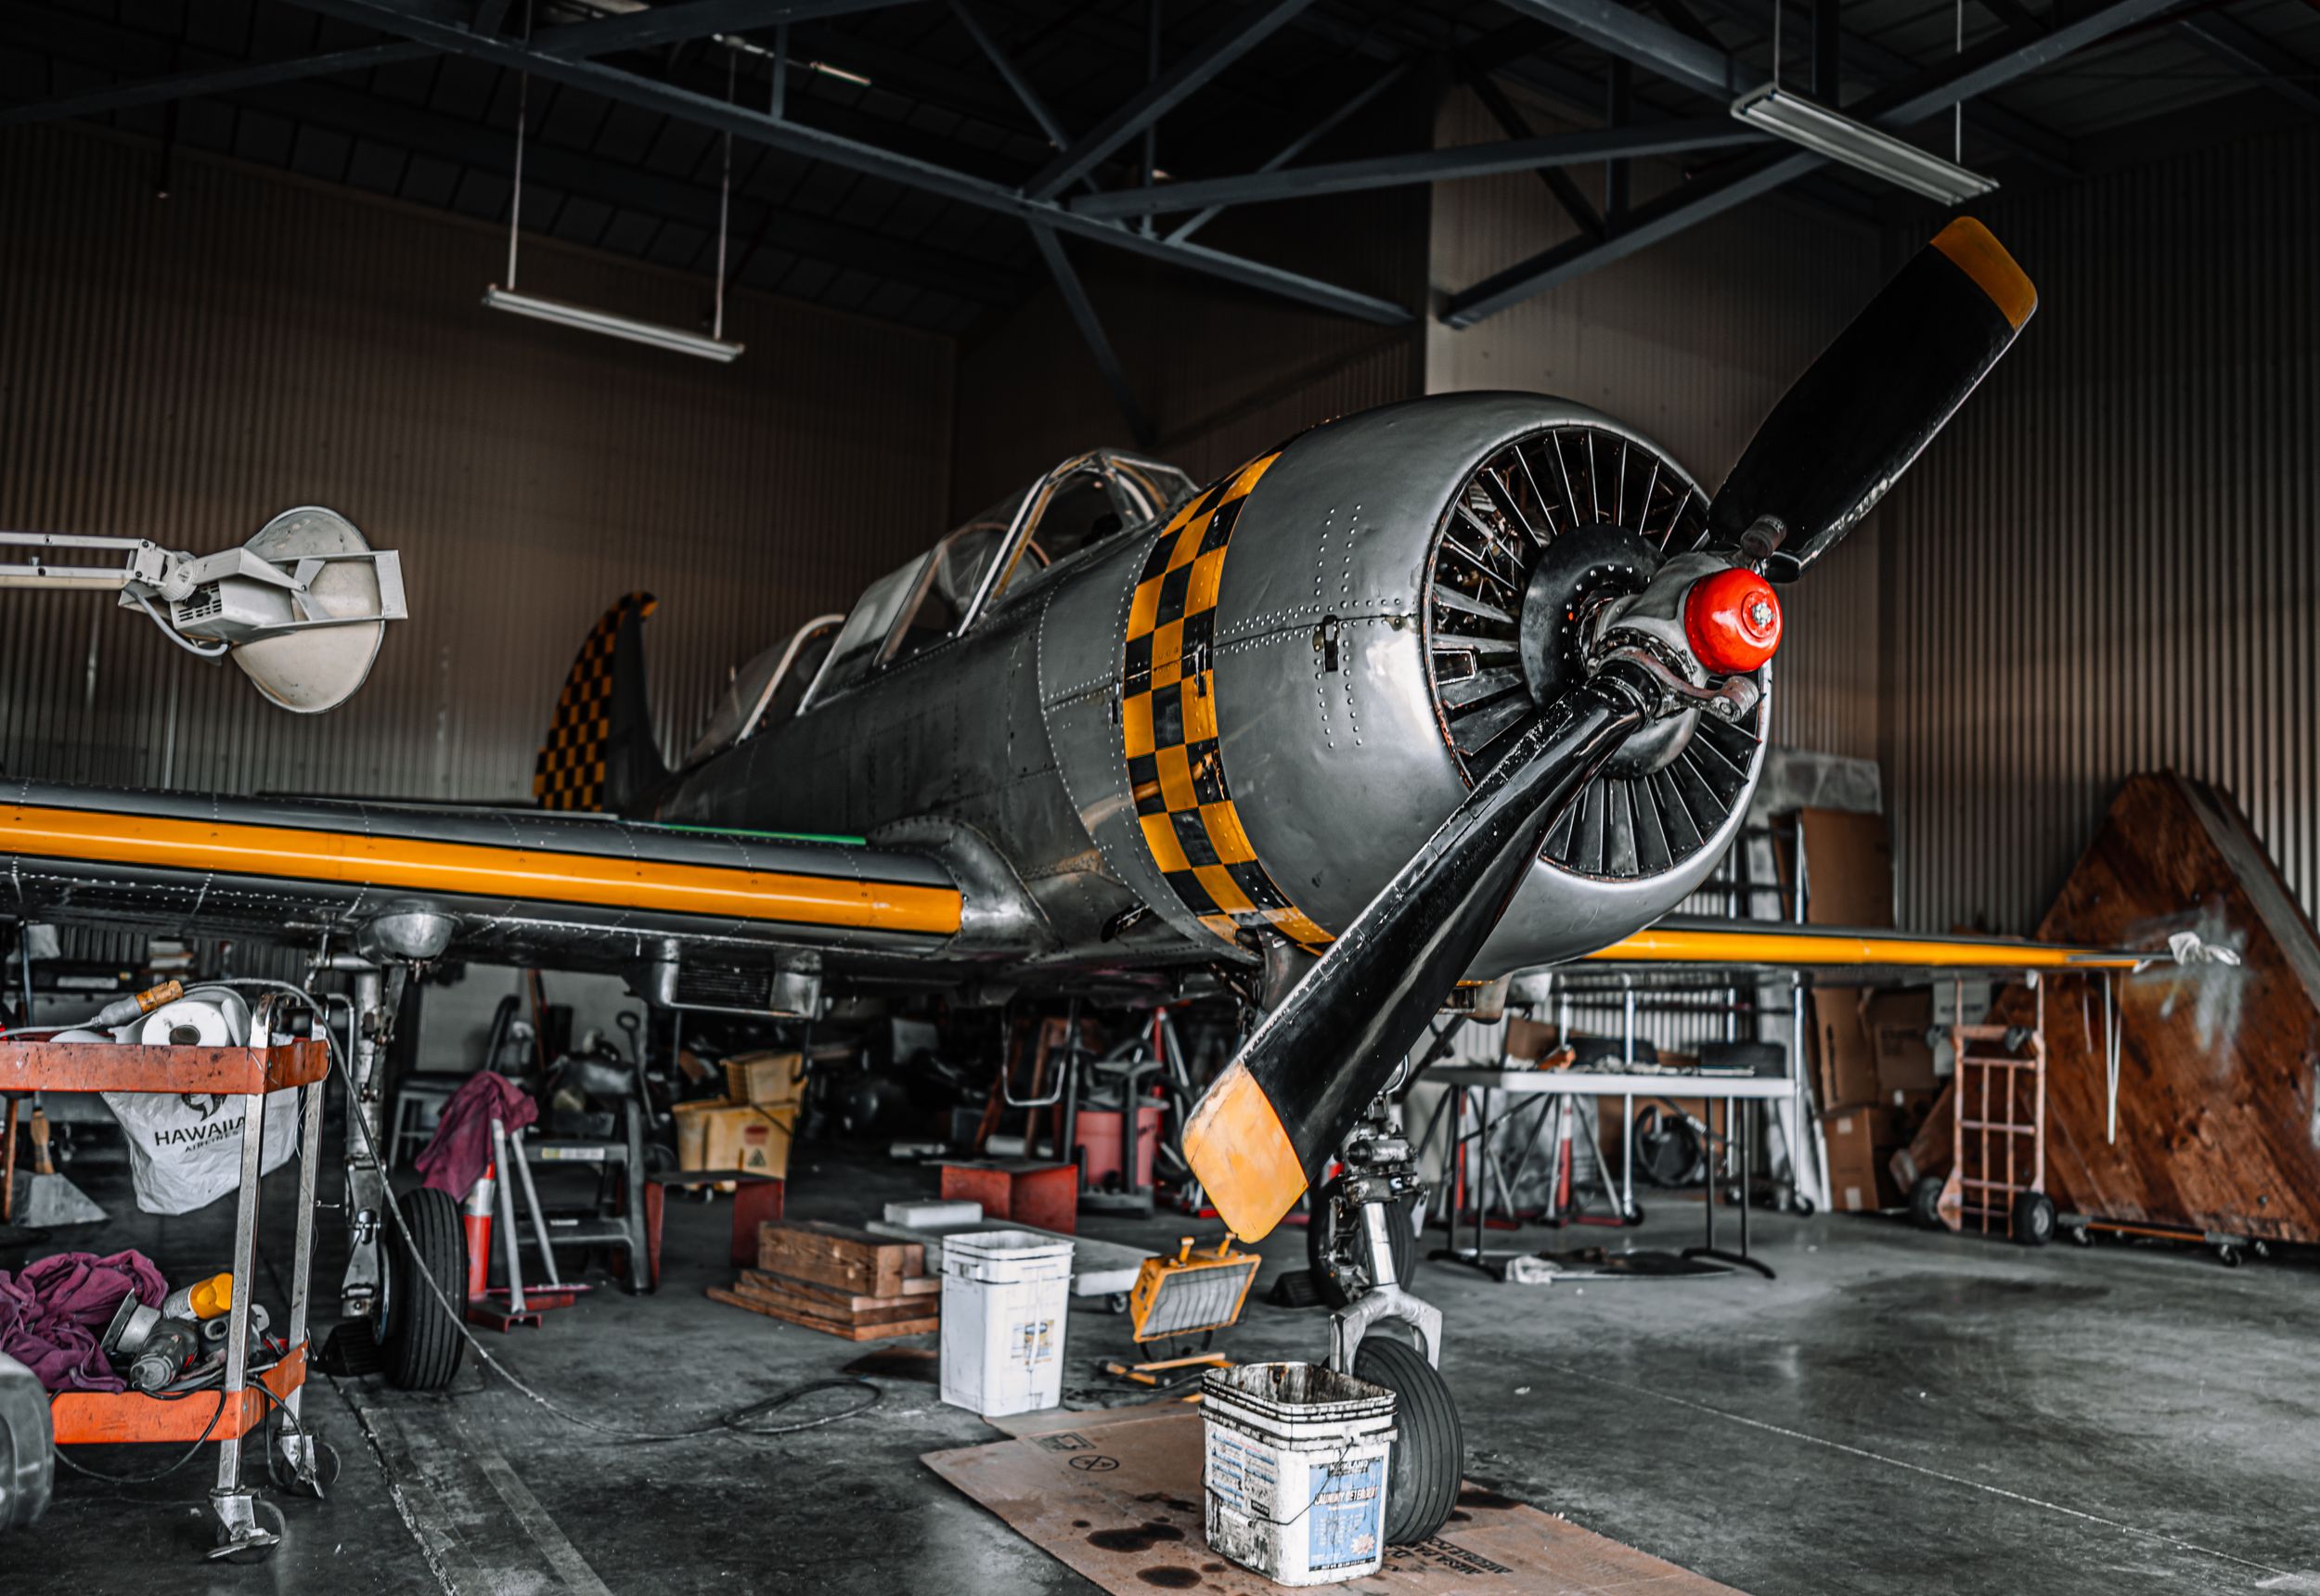 Retro propeller aircraft under mechanicla service in plane hanger.